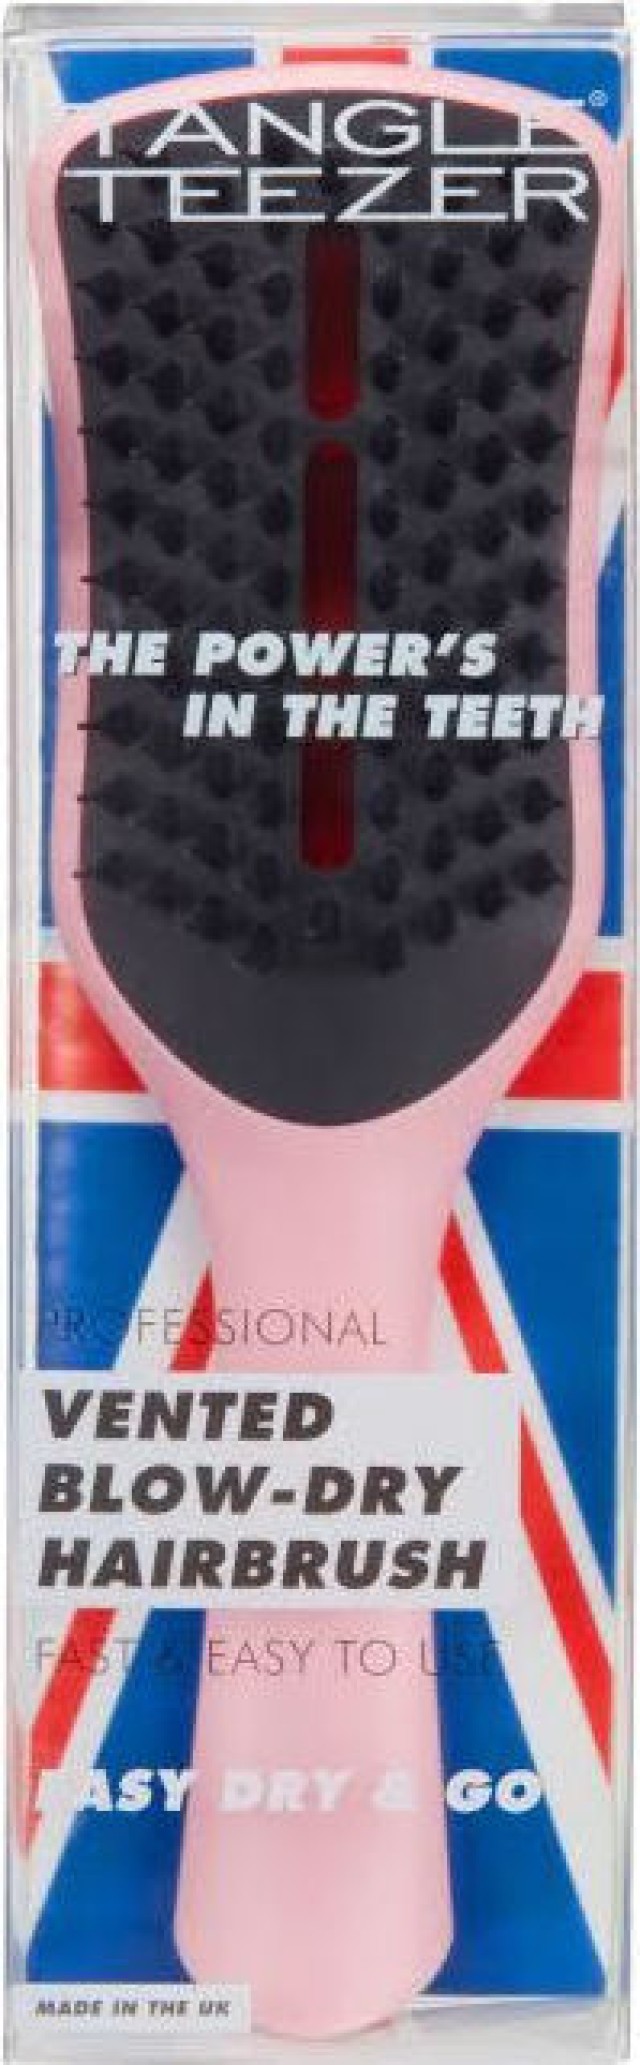 Tangle Teezer Vented Blow-Dry Hairbrush Easy Dry & Go Dusky Pink & Black Βούρτσα Μαλλιών Για Εύκολο Στέγνωμα 1τμχ